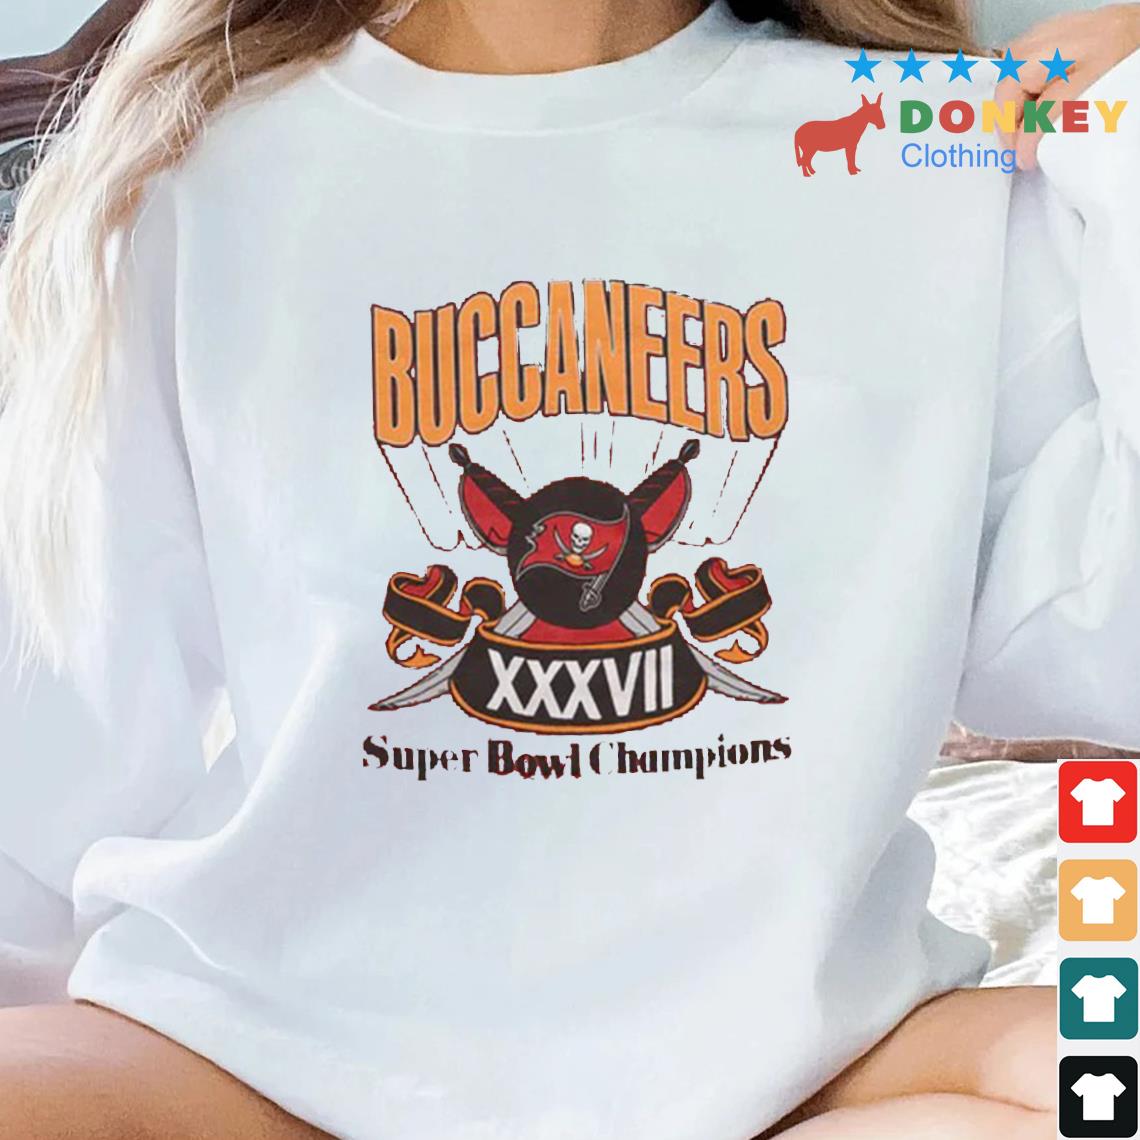 Tampa Bay Buccaneers Super Bowl XXXVII Champs Shirt